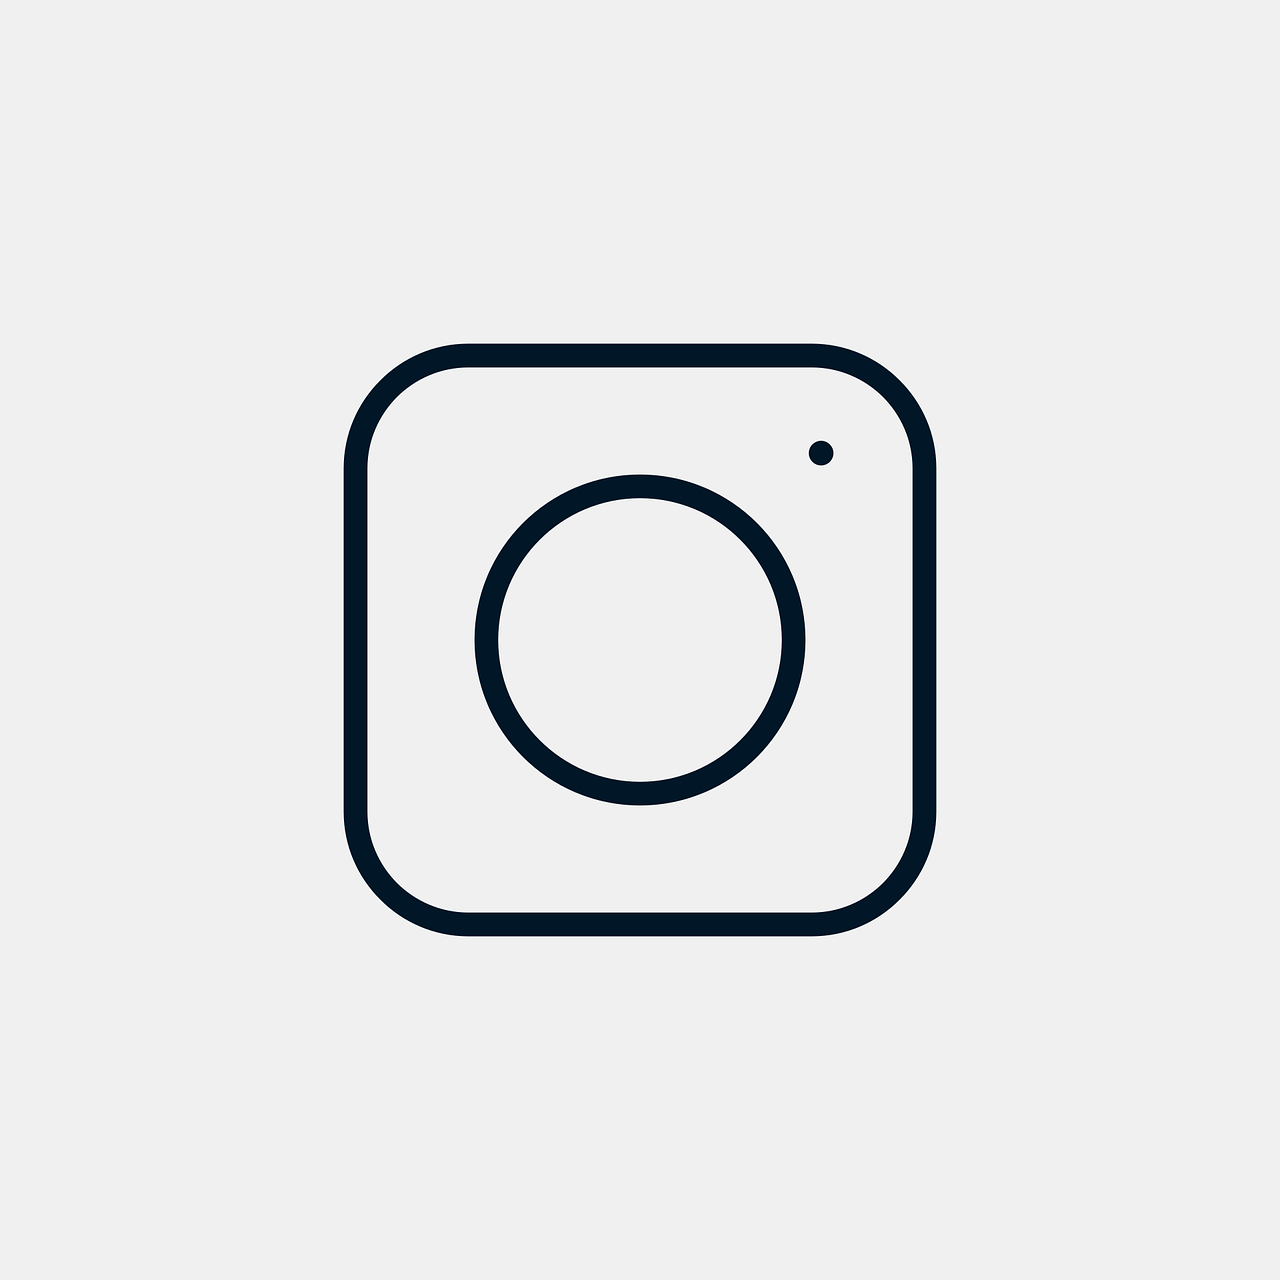 Download free photo of Instagram,insta,instagram logo,instagram icon